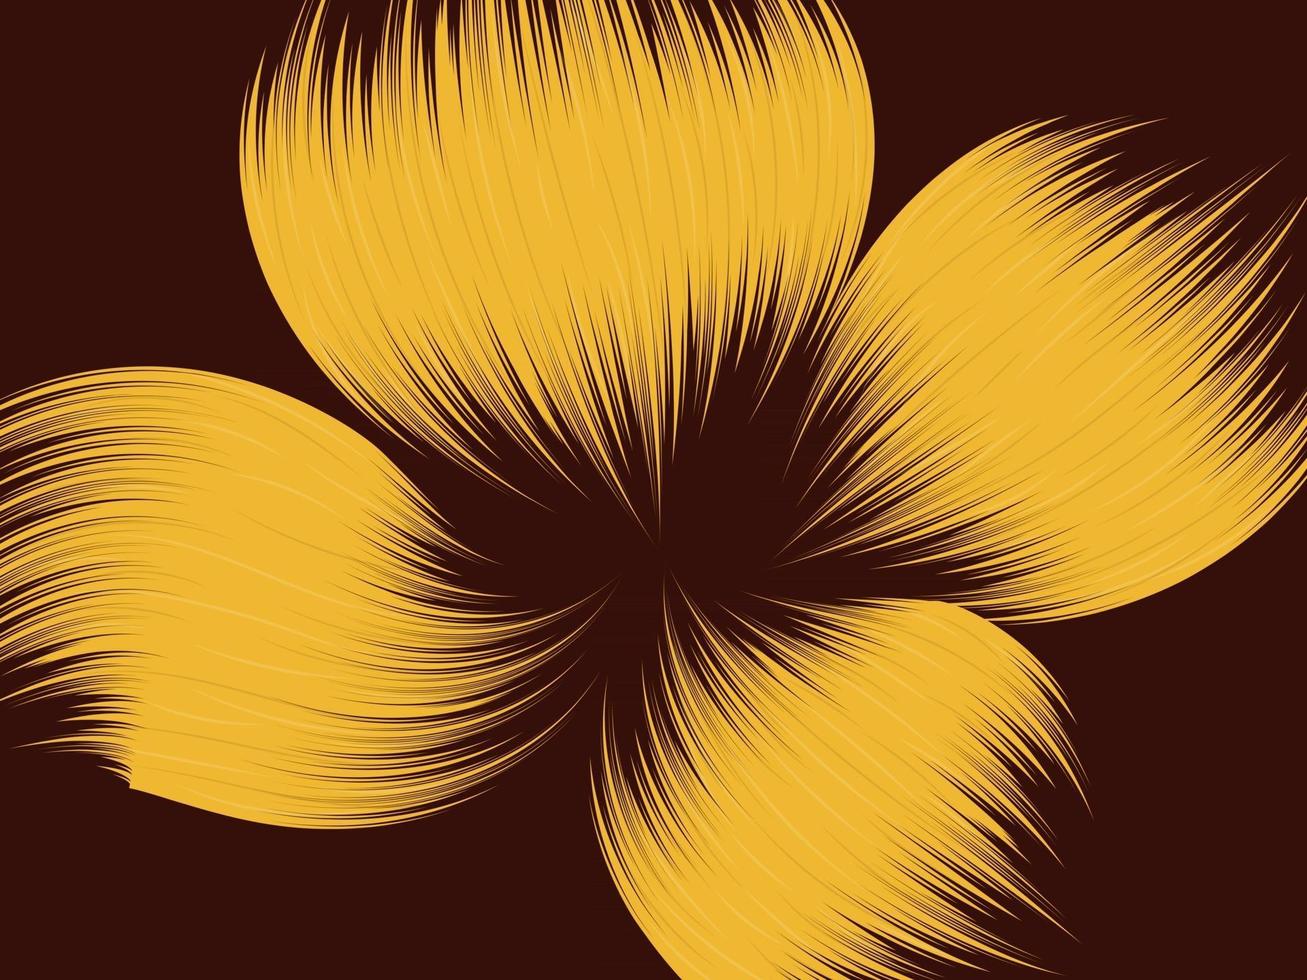 Flower Abstract Wallpaper vector